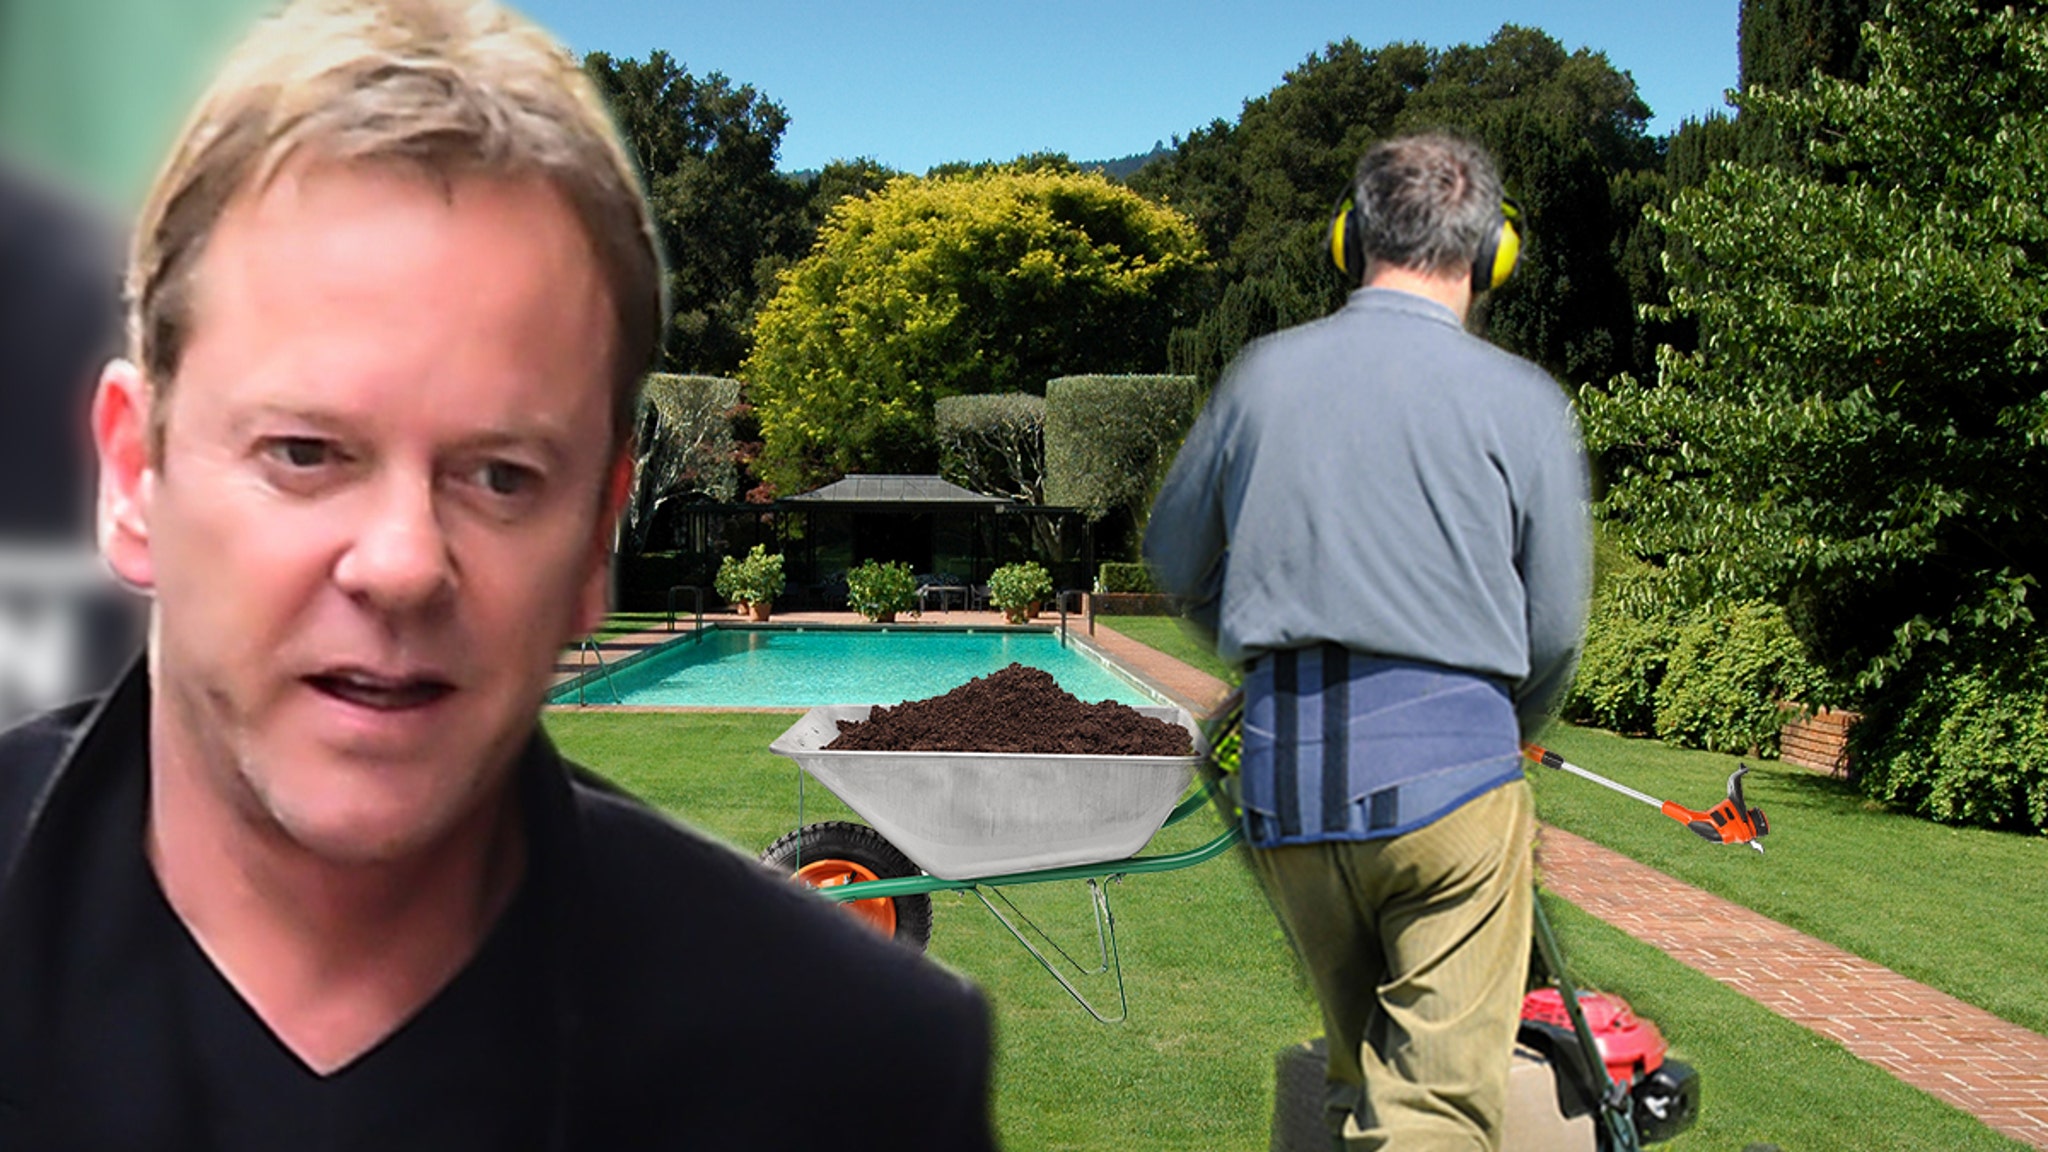 Kiefer Sutherland's Gardener's Equipment Stolen at Home